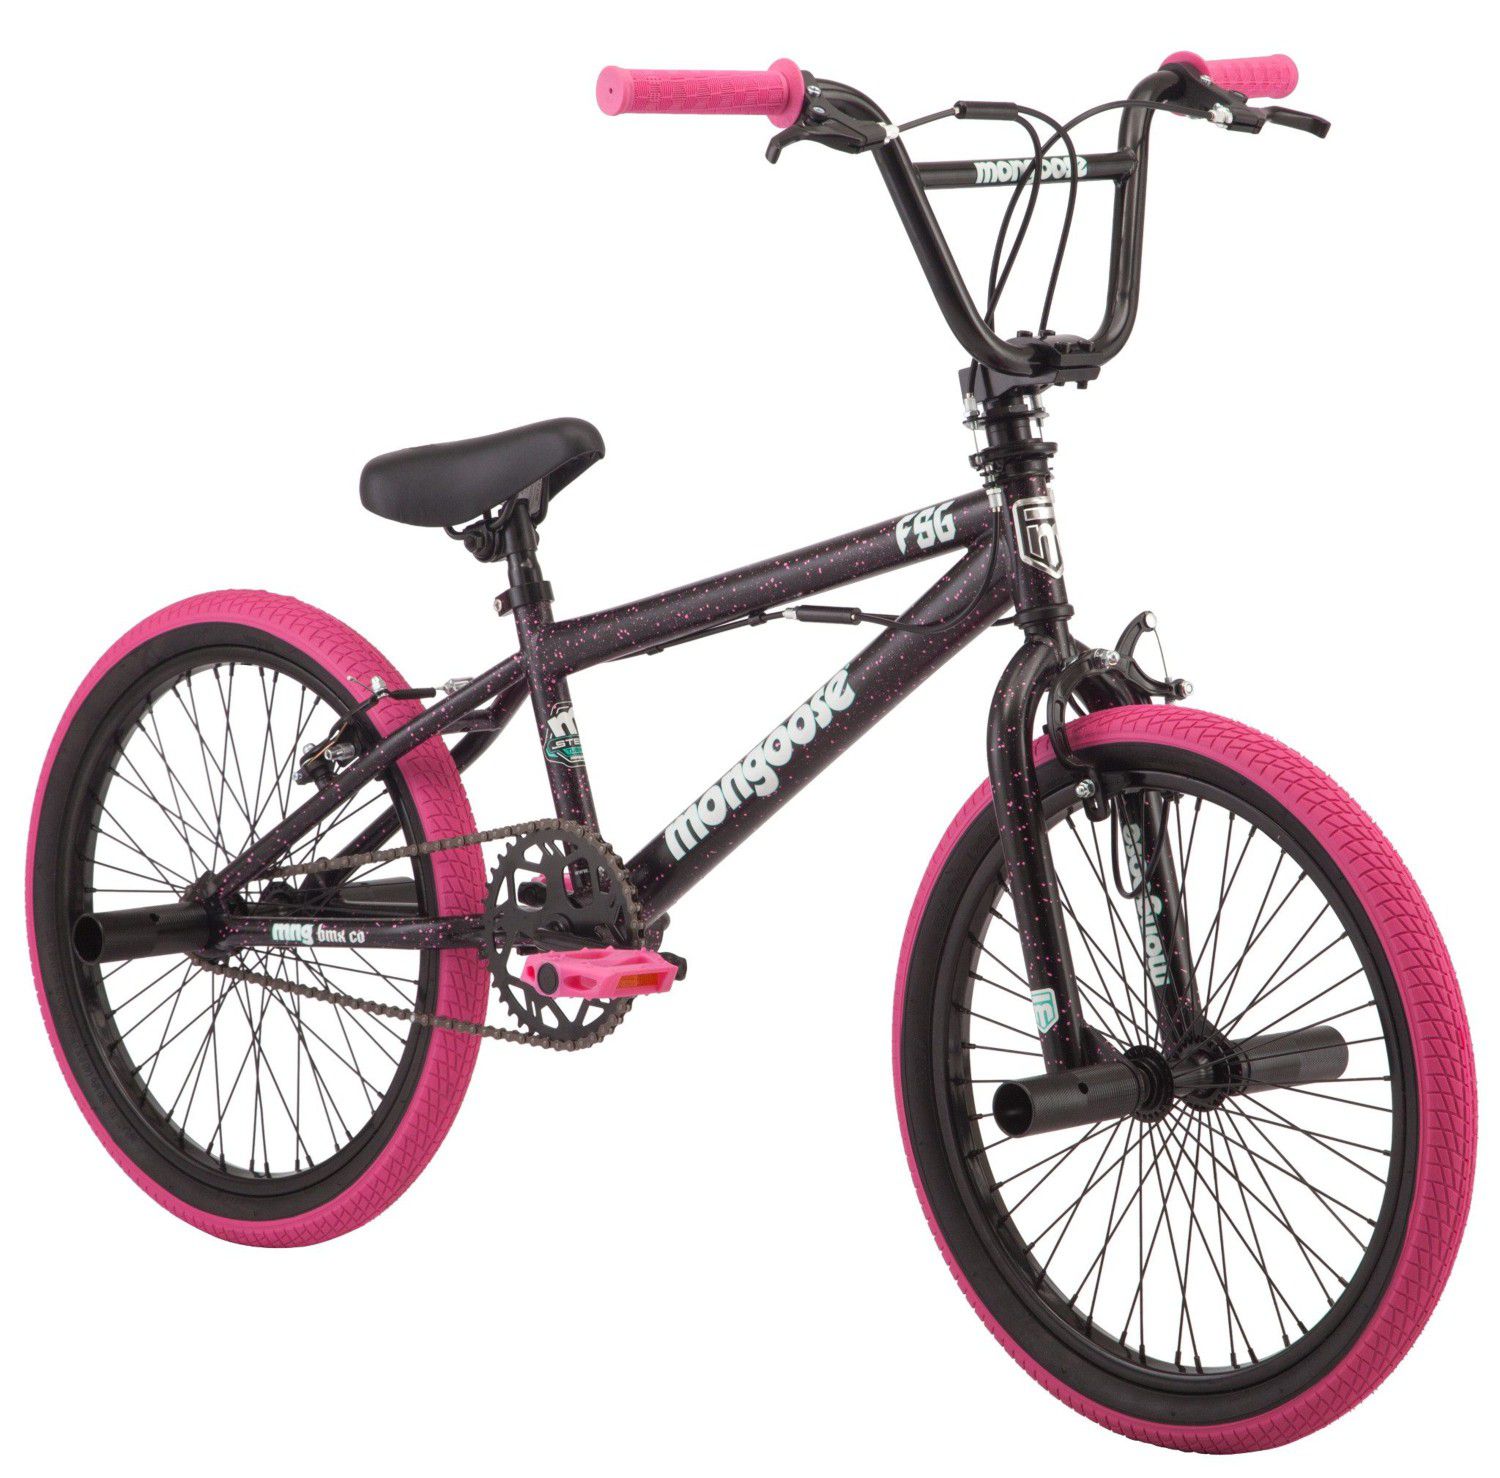 Mongoose FSG BMX Bike, 20-inch wheels, single speed, black /pink